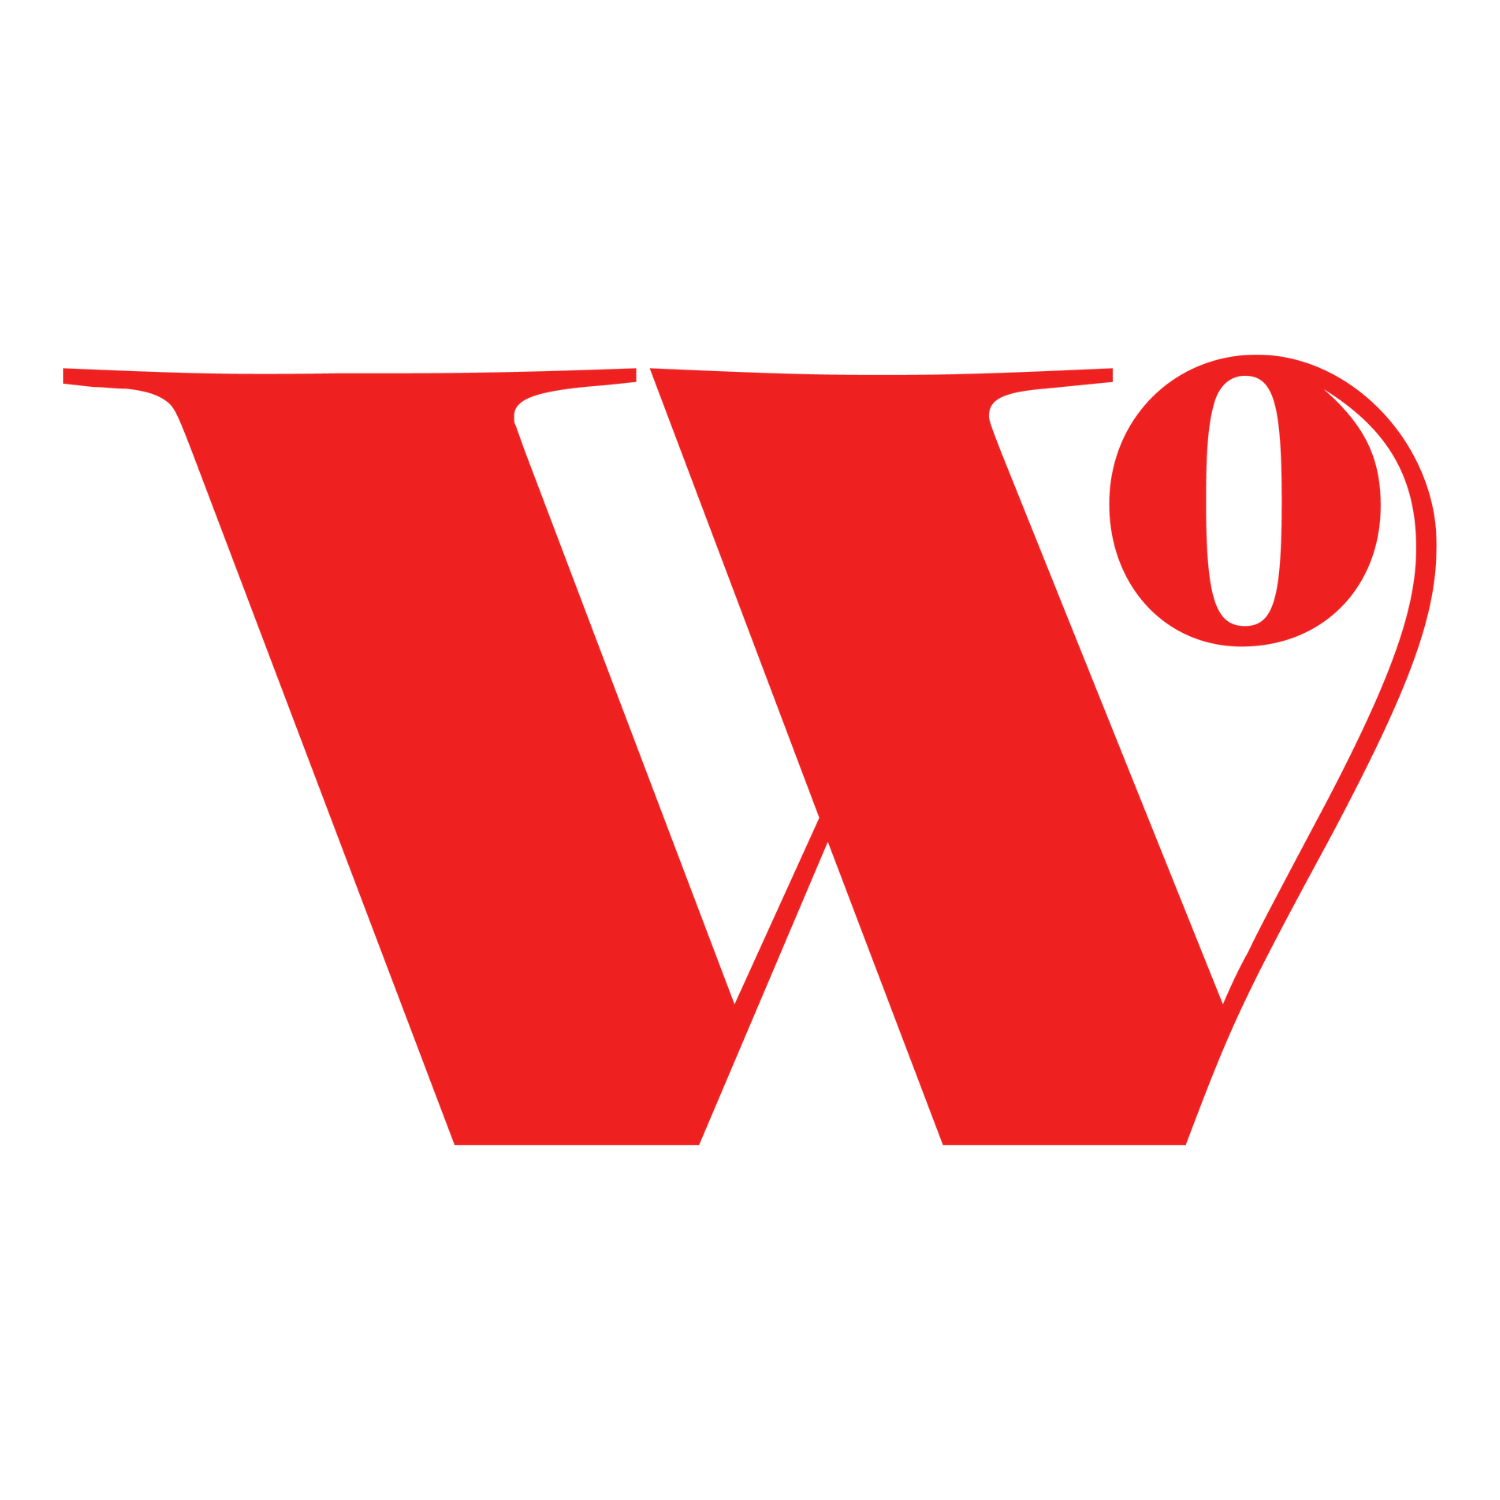 Women's Organisation logo